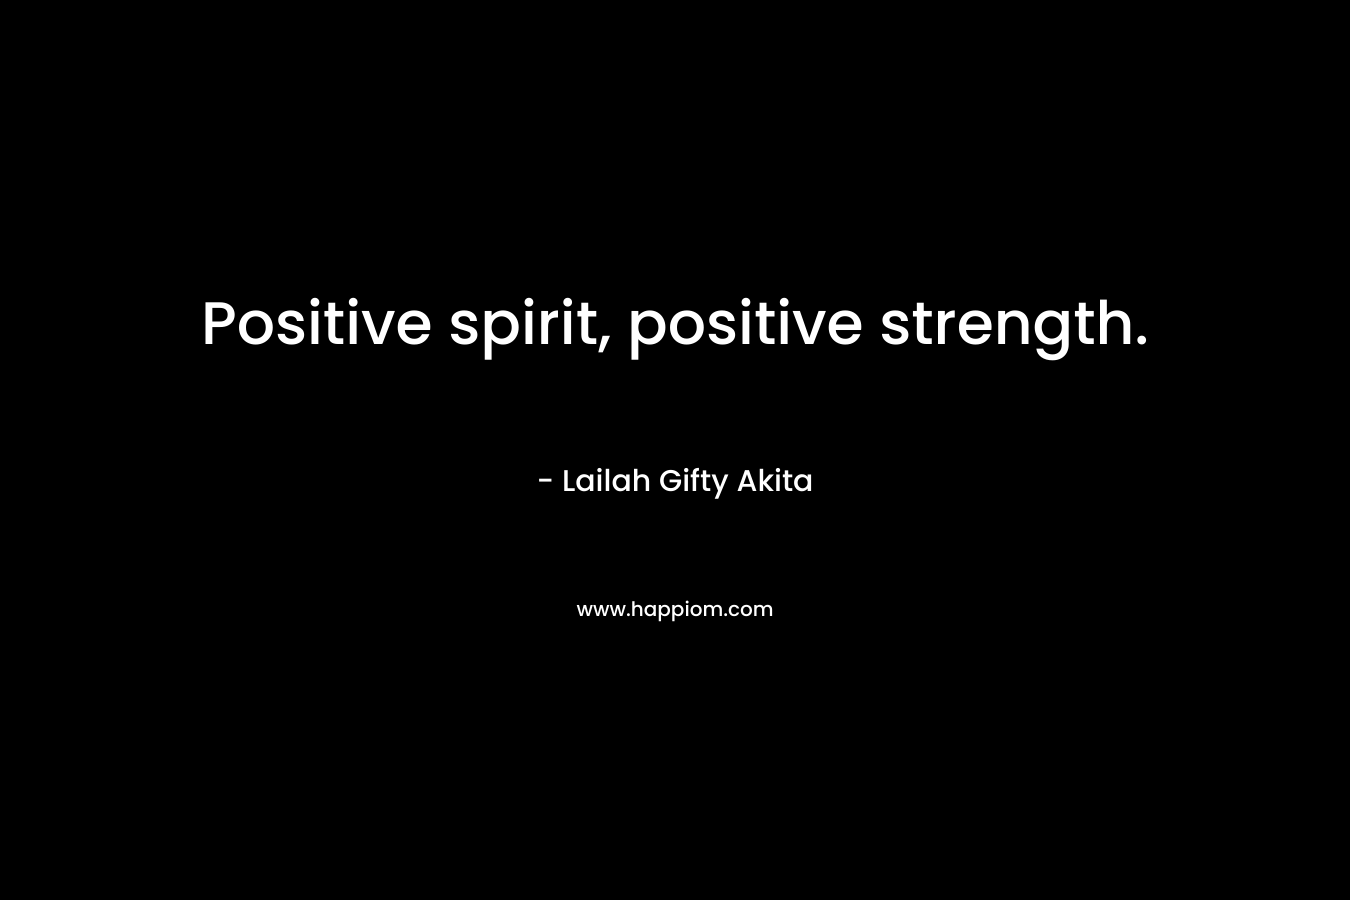 Positive spirit, positive strength.